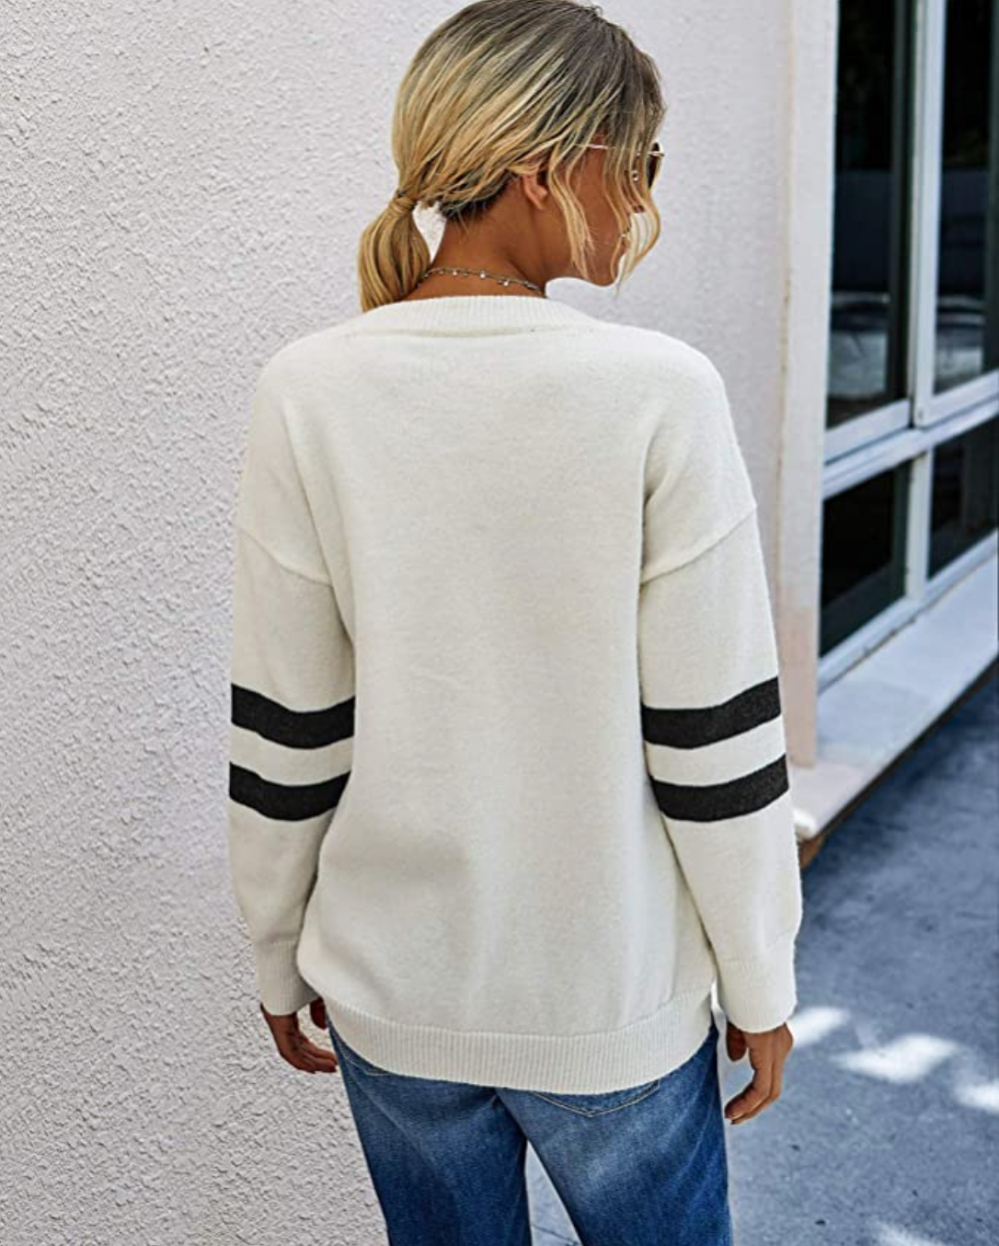 PRETTYGARDEN Women’s Casual Long Sleeve Knitted Color Block Sweater